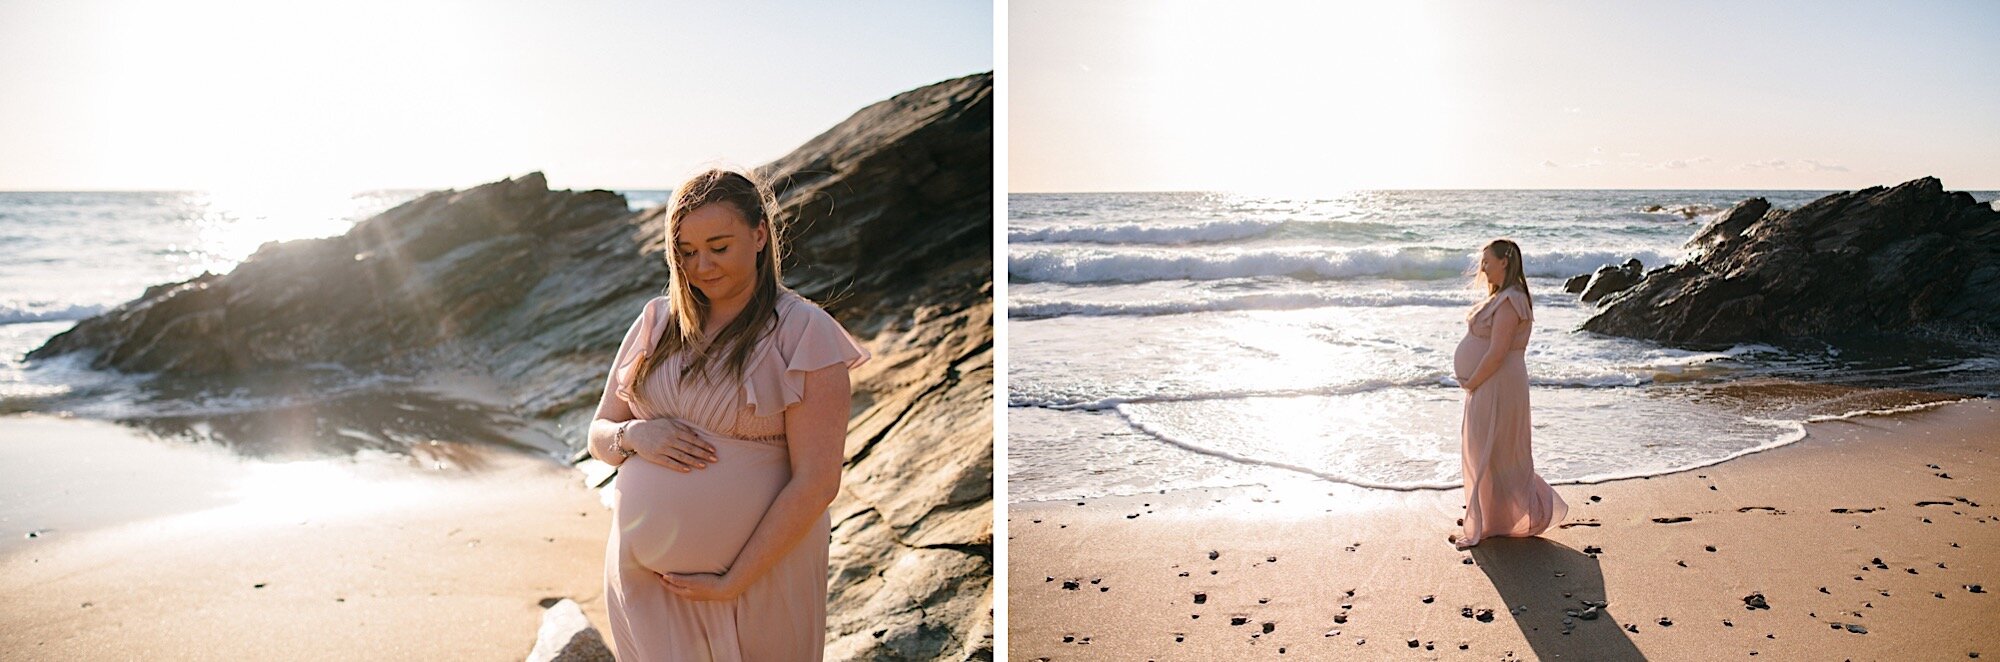 Maternity Photography Cornwall_Bump Photography Cornwall_Preganancy Photography_By Freckle Photography_004.jpg